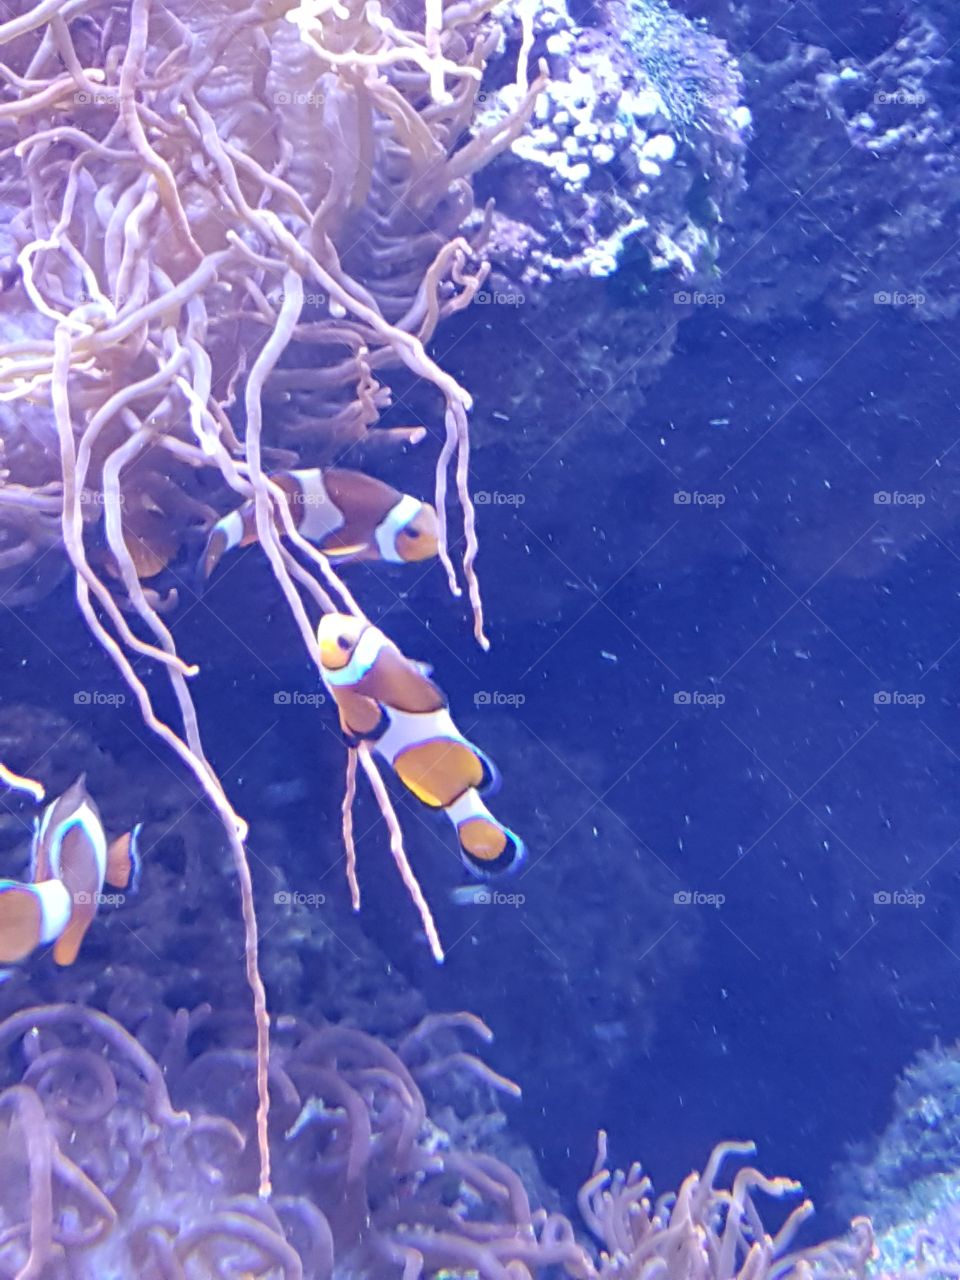 Where is Nemo?